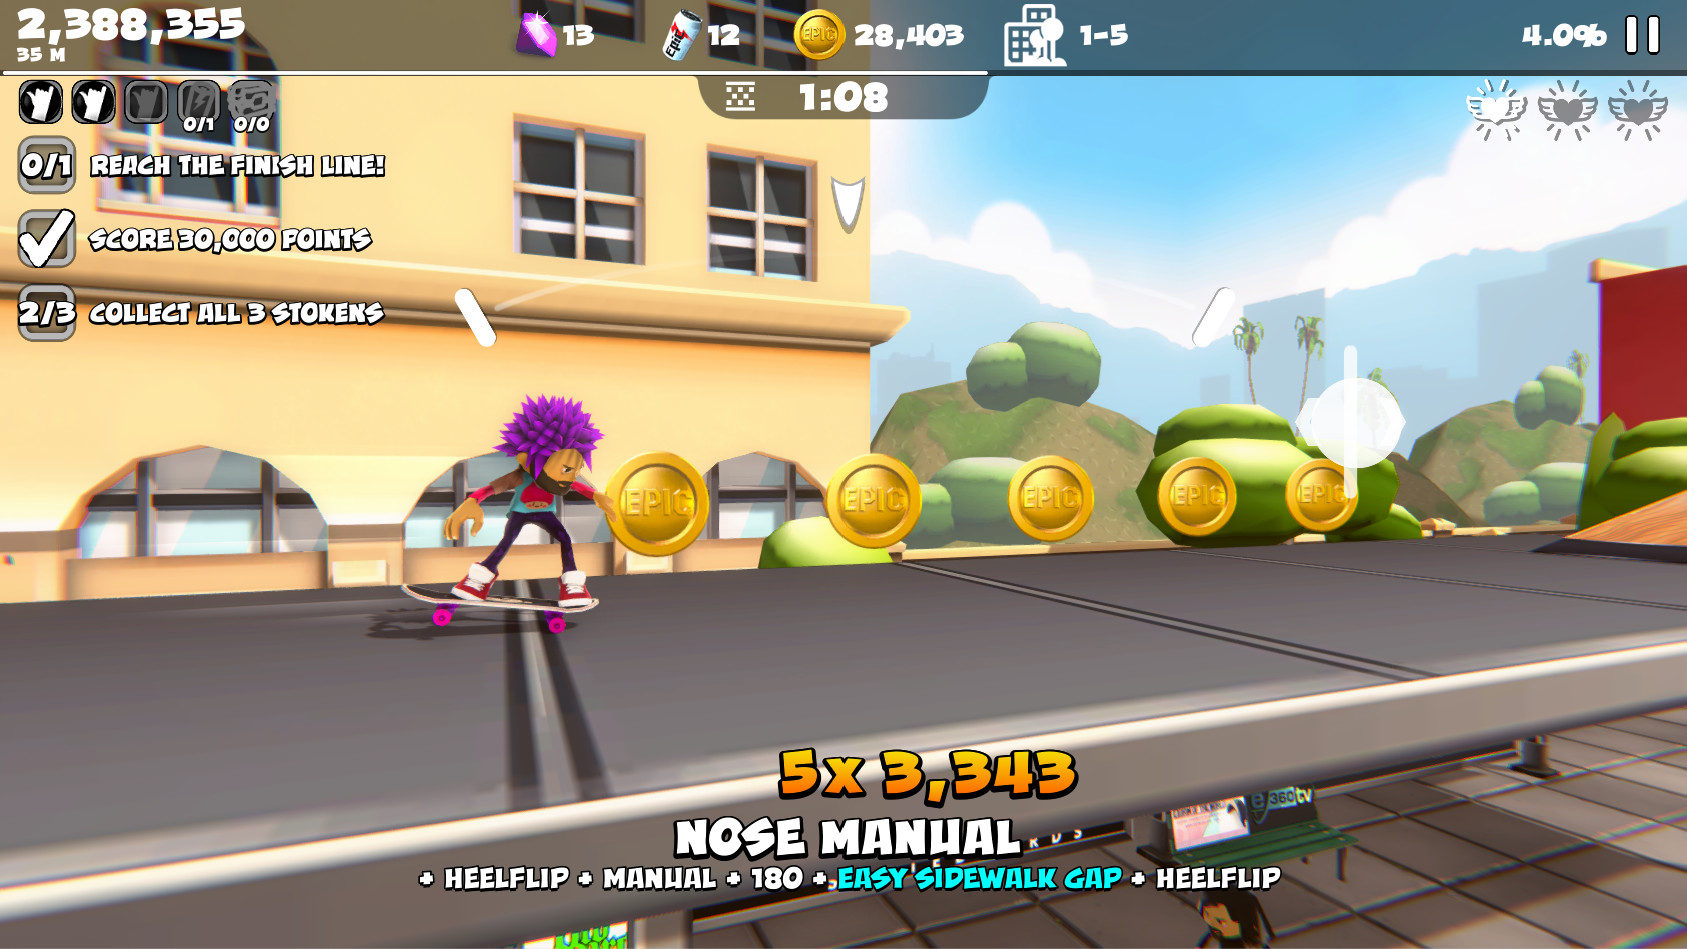 Epic Skater 2 screenshot